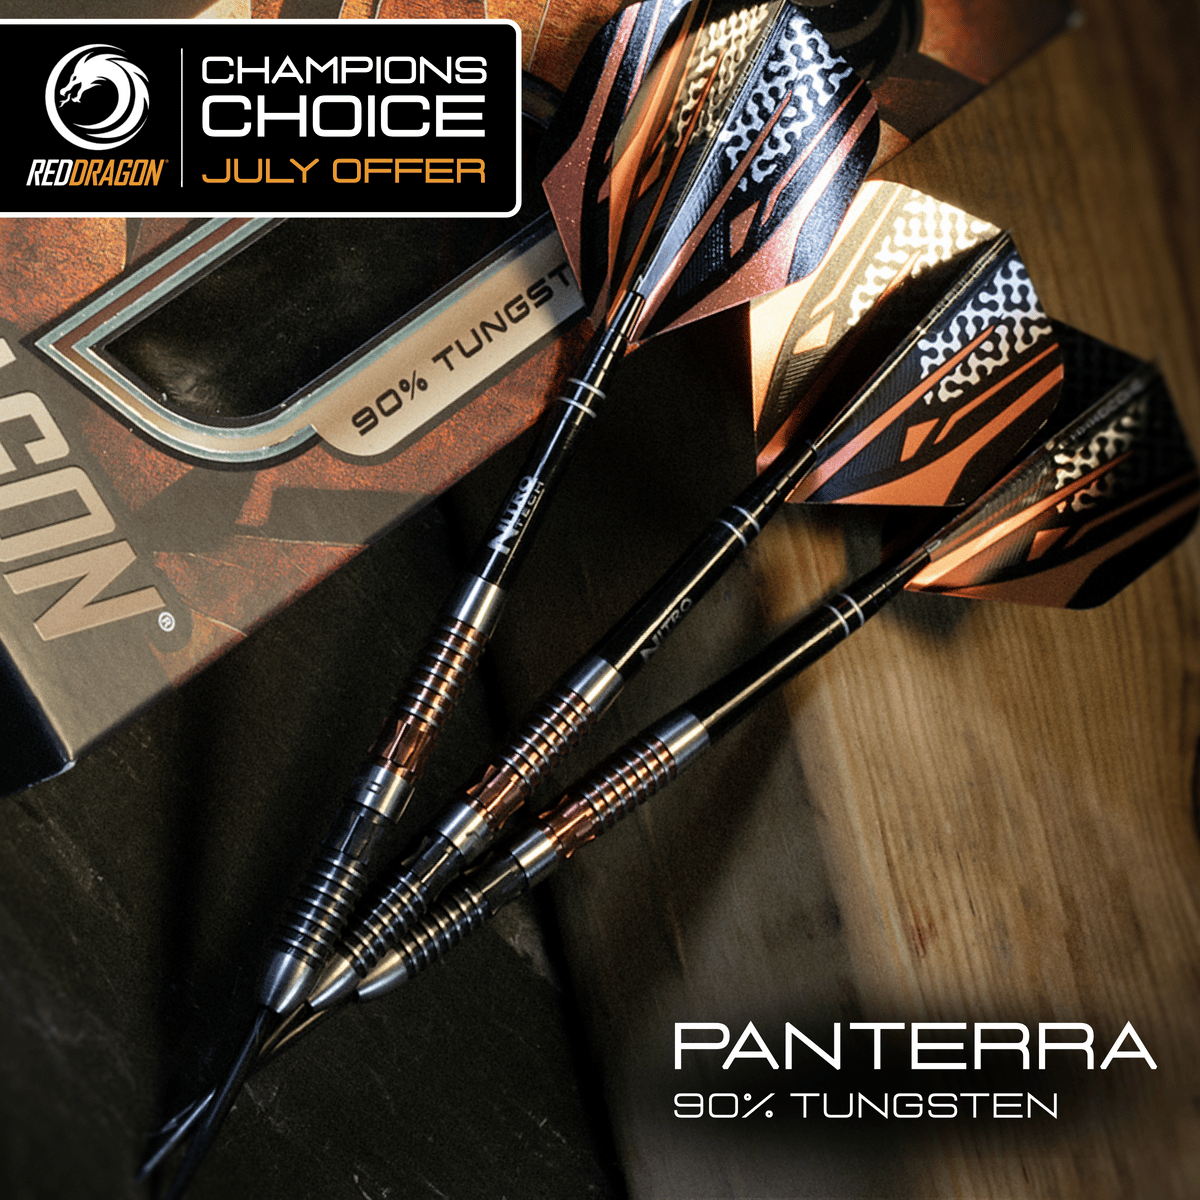 Panterra Champions Choice copy-8-Panterra 3840x960 (2)